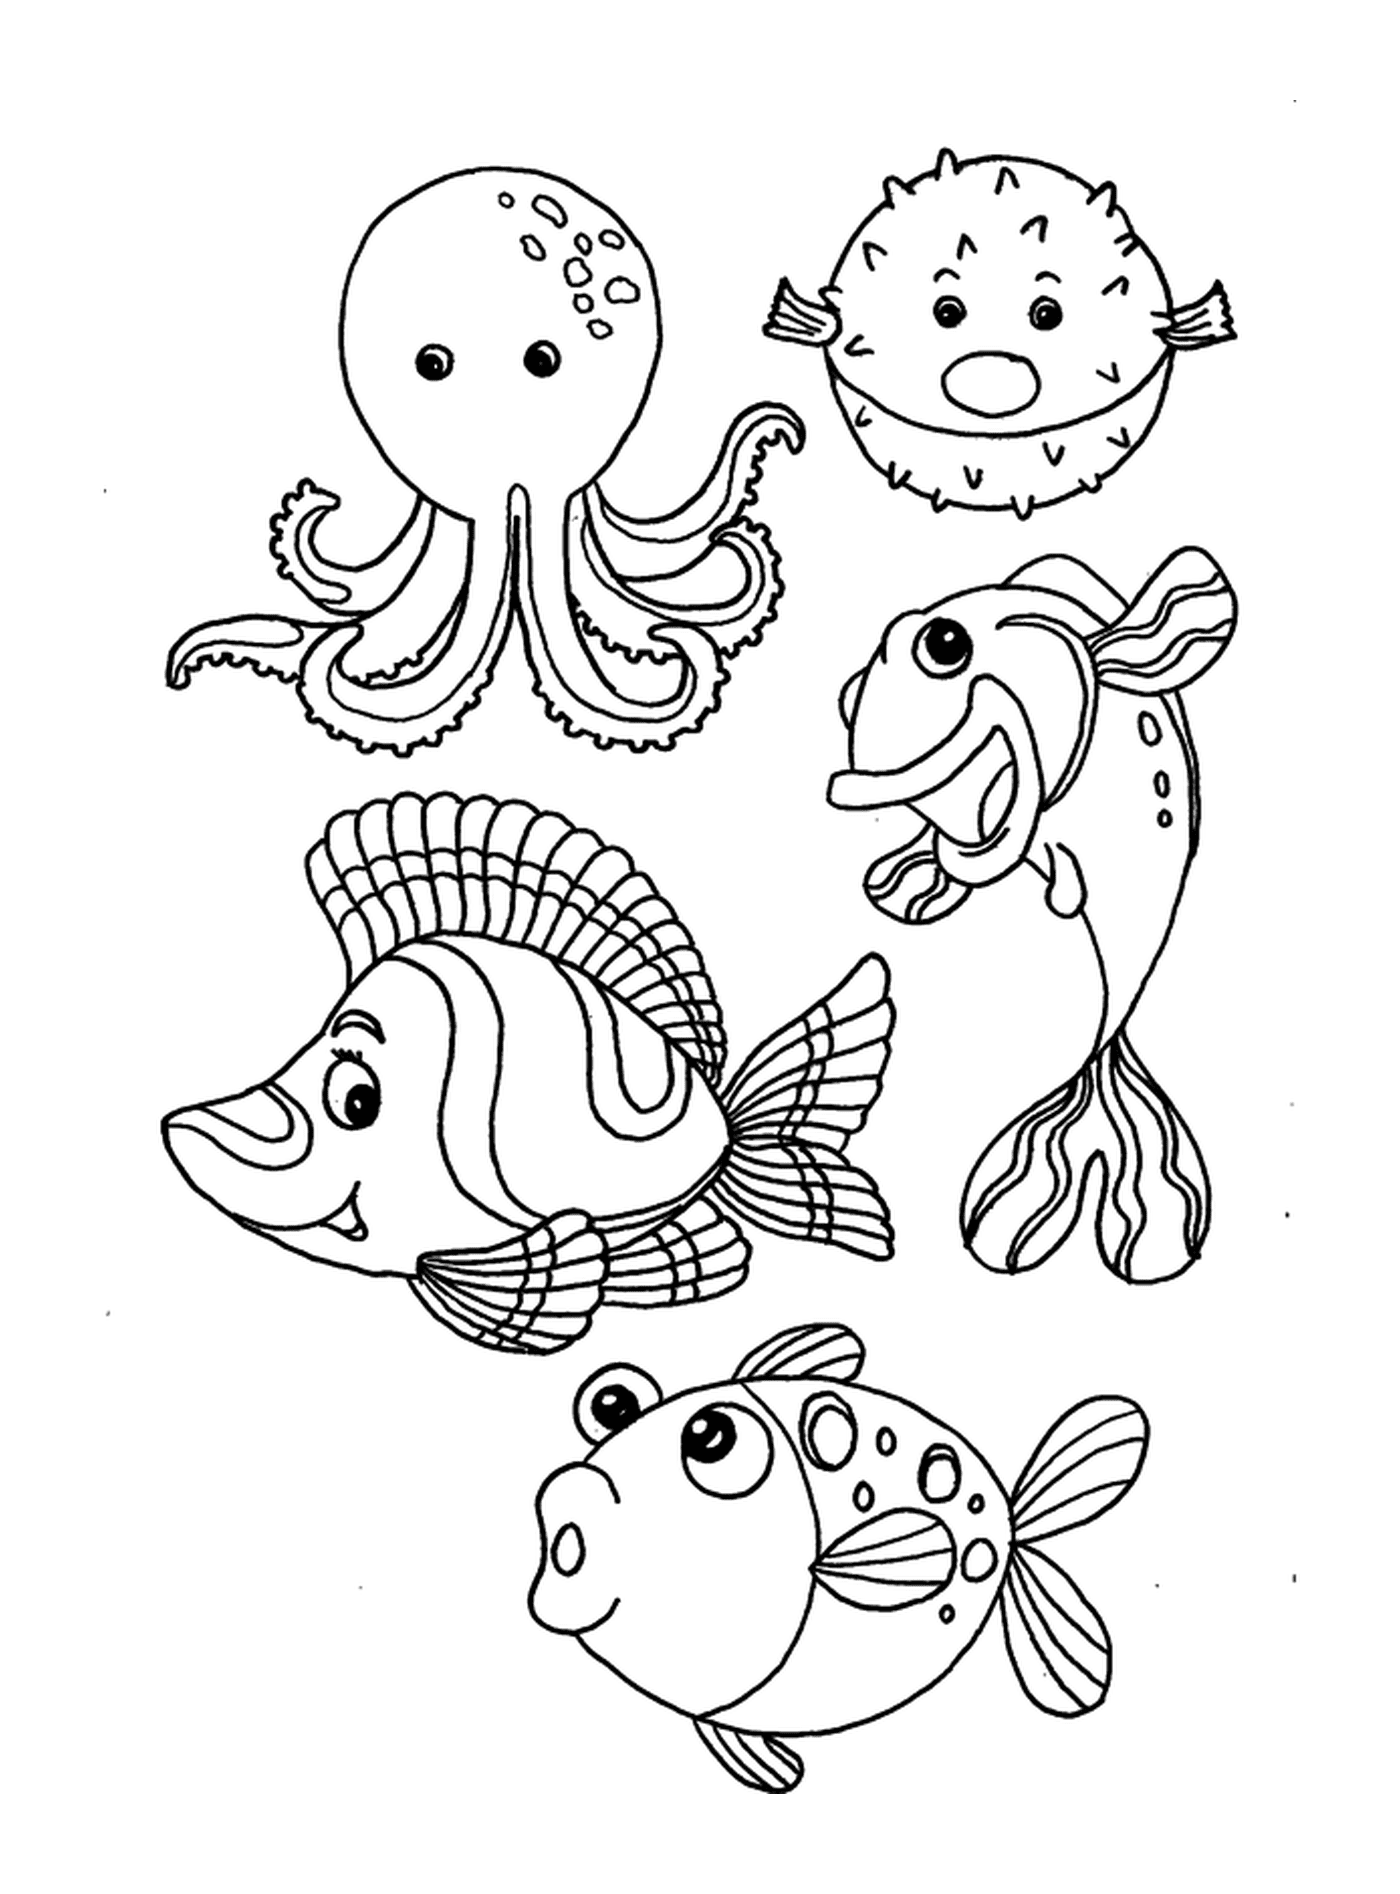  a set of marine fish 